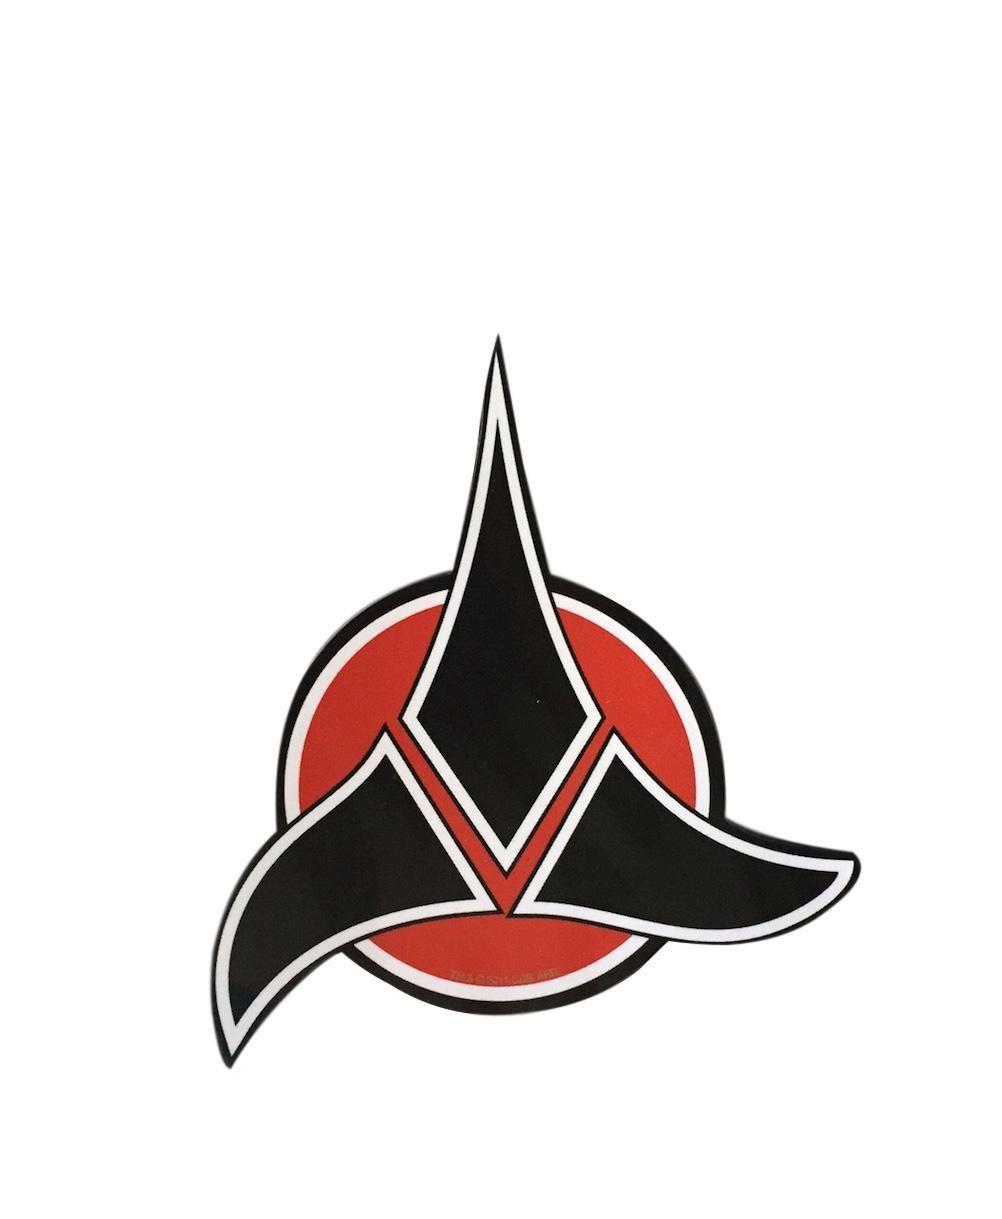 Red Star Trek Logo - Star Trek Klingon Red and Black Symbol Logo 4 Inch Peel and Stick ...